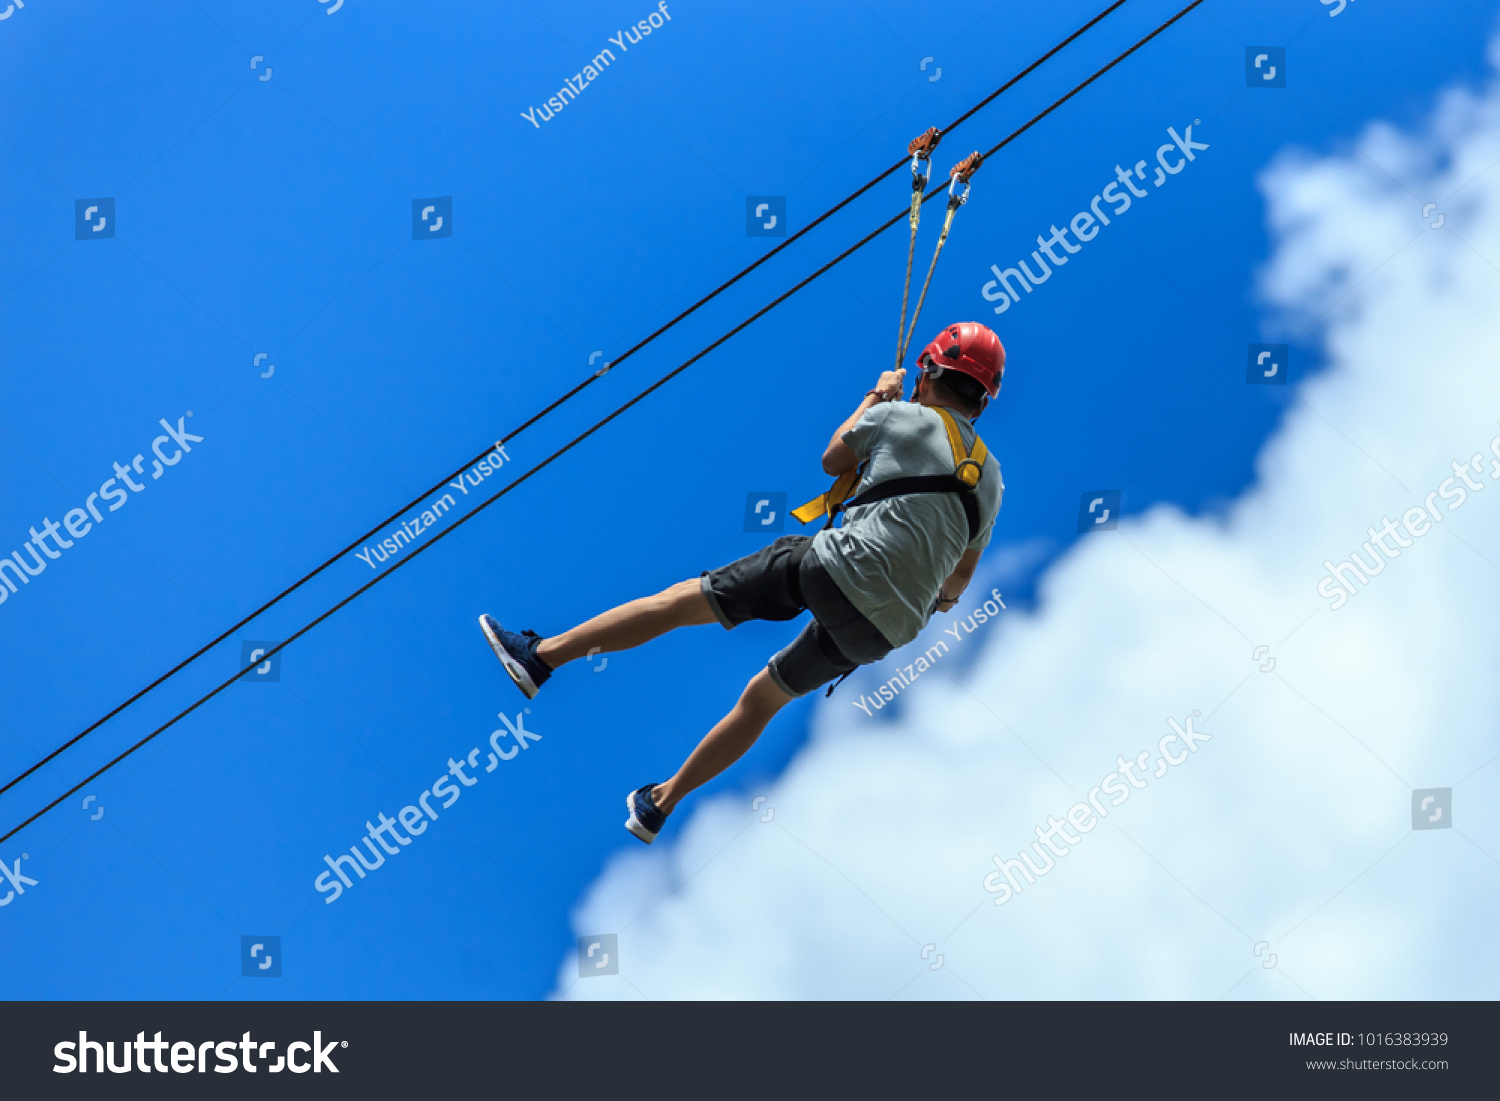 Man enjoying Zipline adventure in Sabah Borneo, Malaysia #1016383939